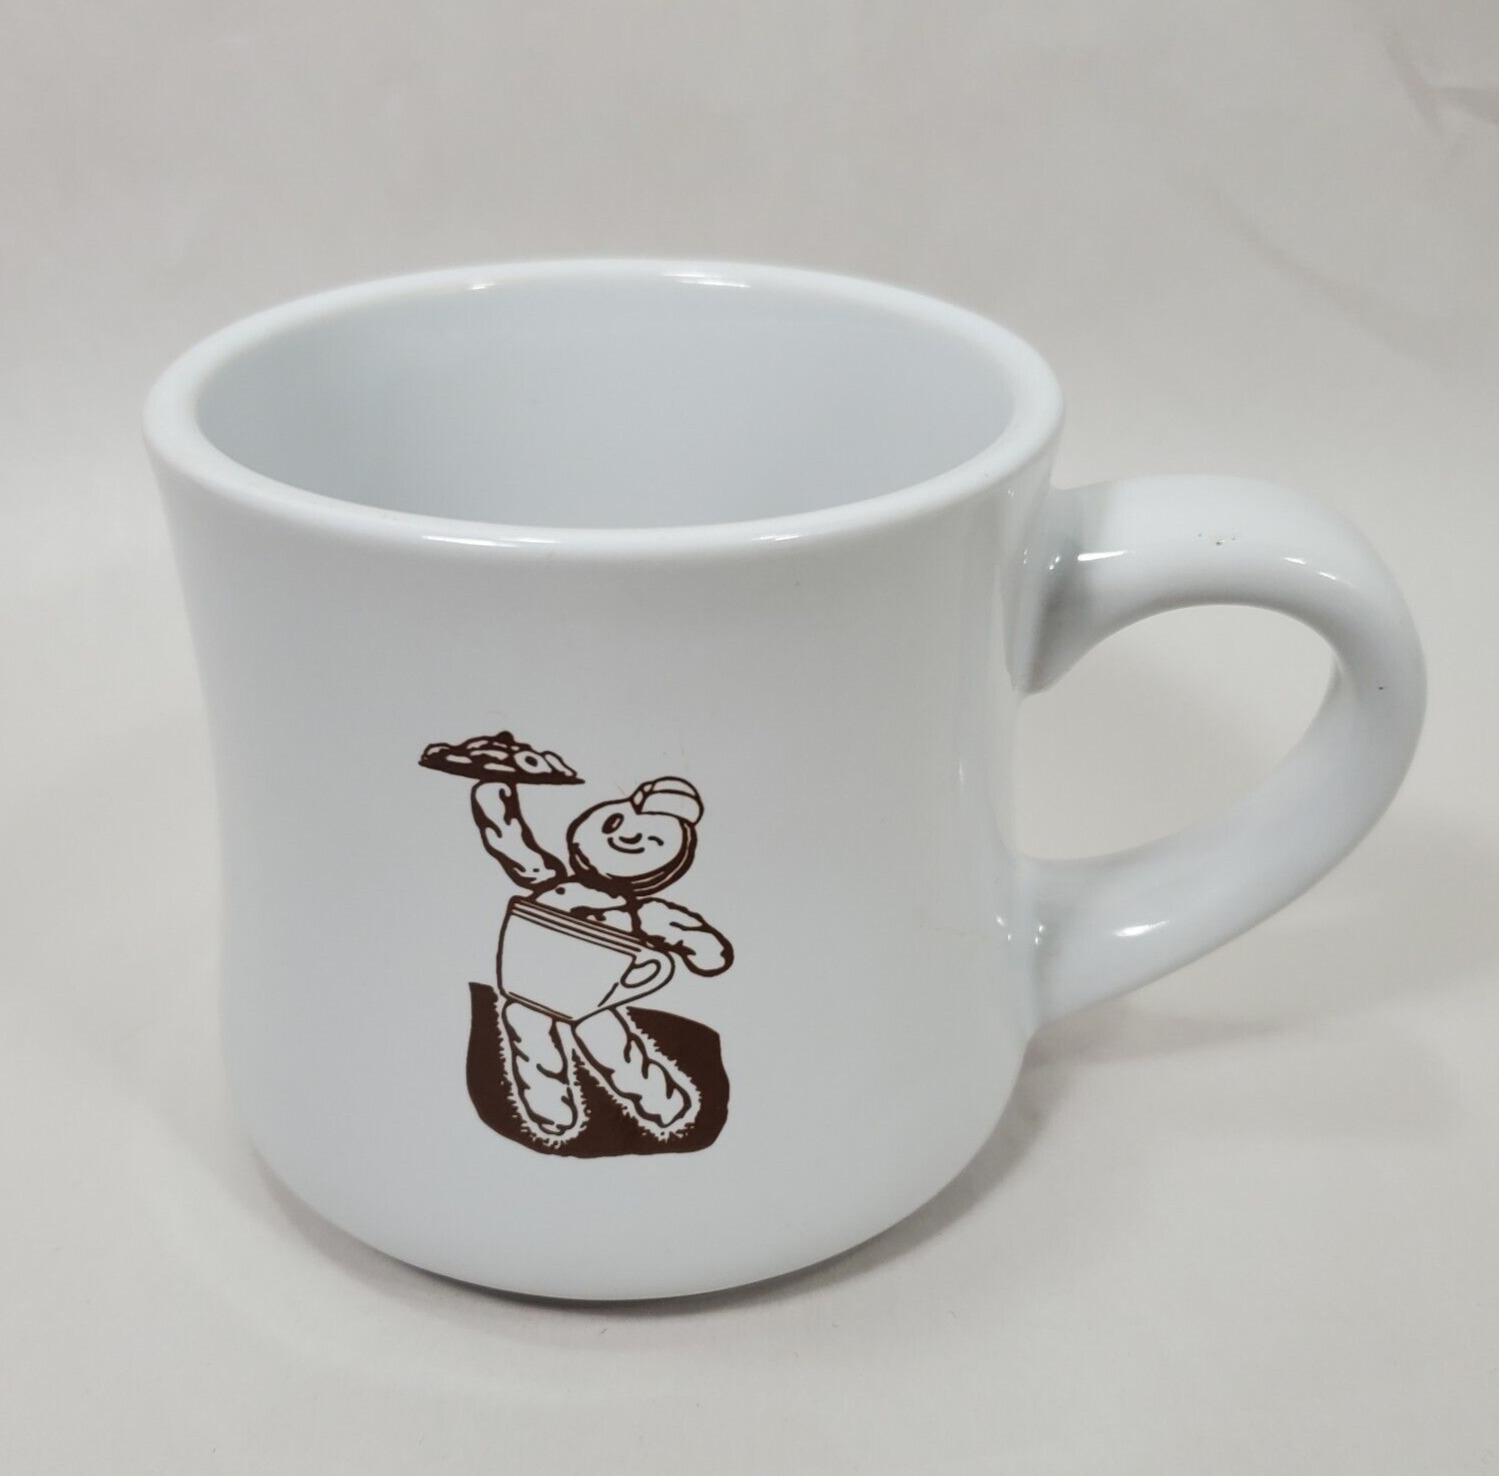 Dunkin Donuts Mug Vintage Advertising Coffee Cup 60s Dunkie Mascot Cursive Logo